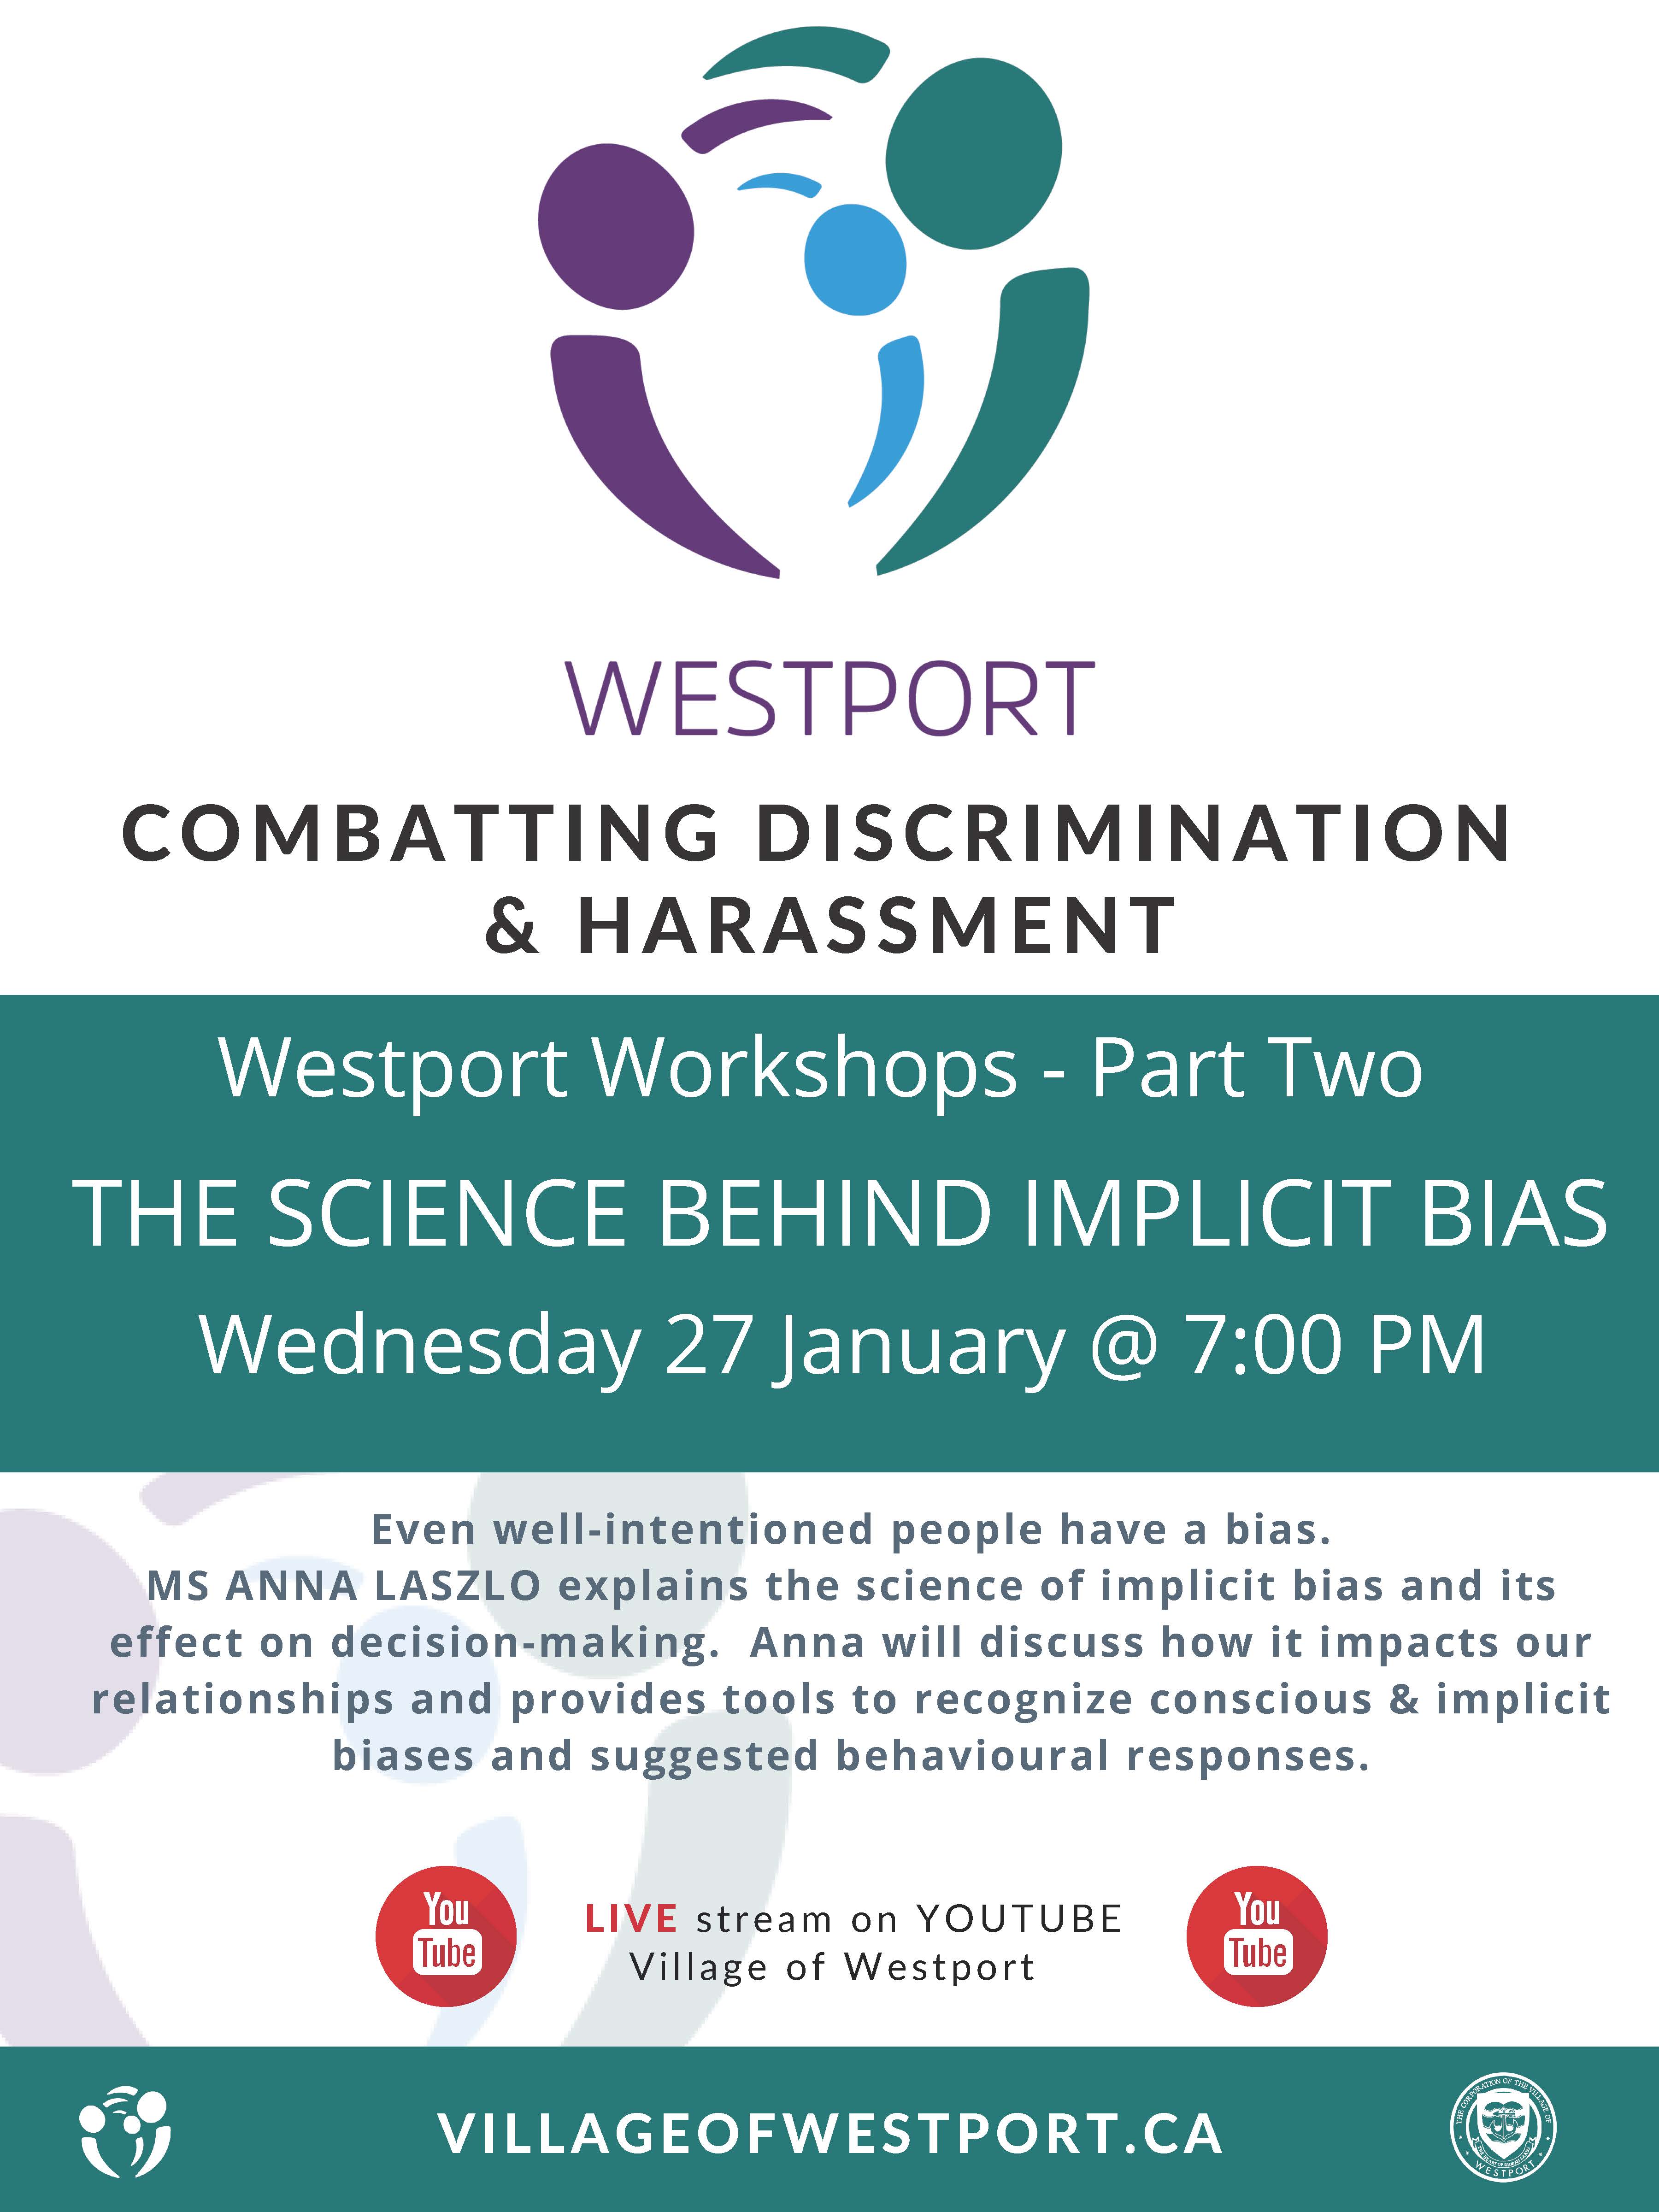 Combatting Discrimination & Harassment Workshop January 27/21 on YouTube